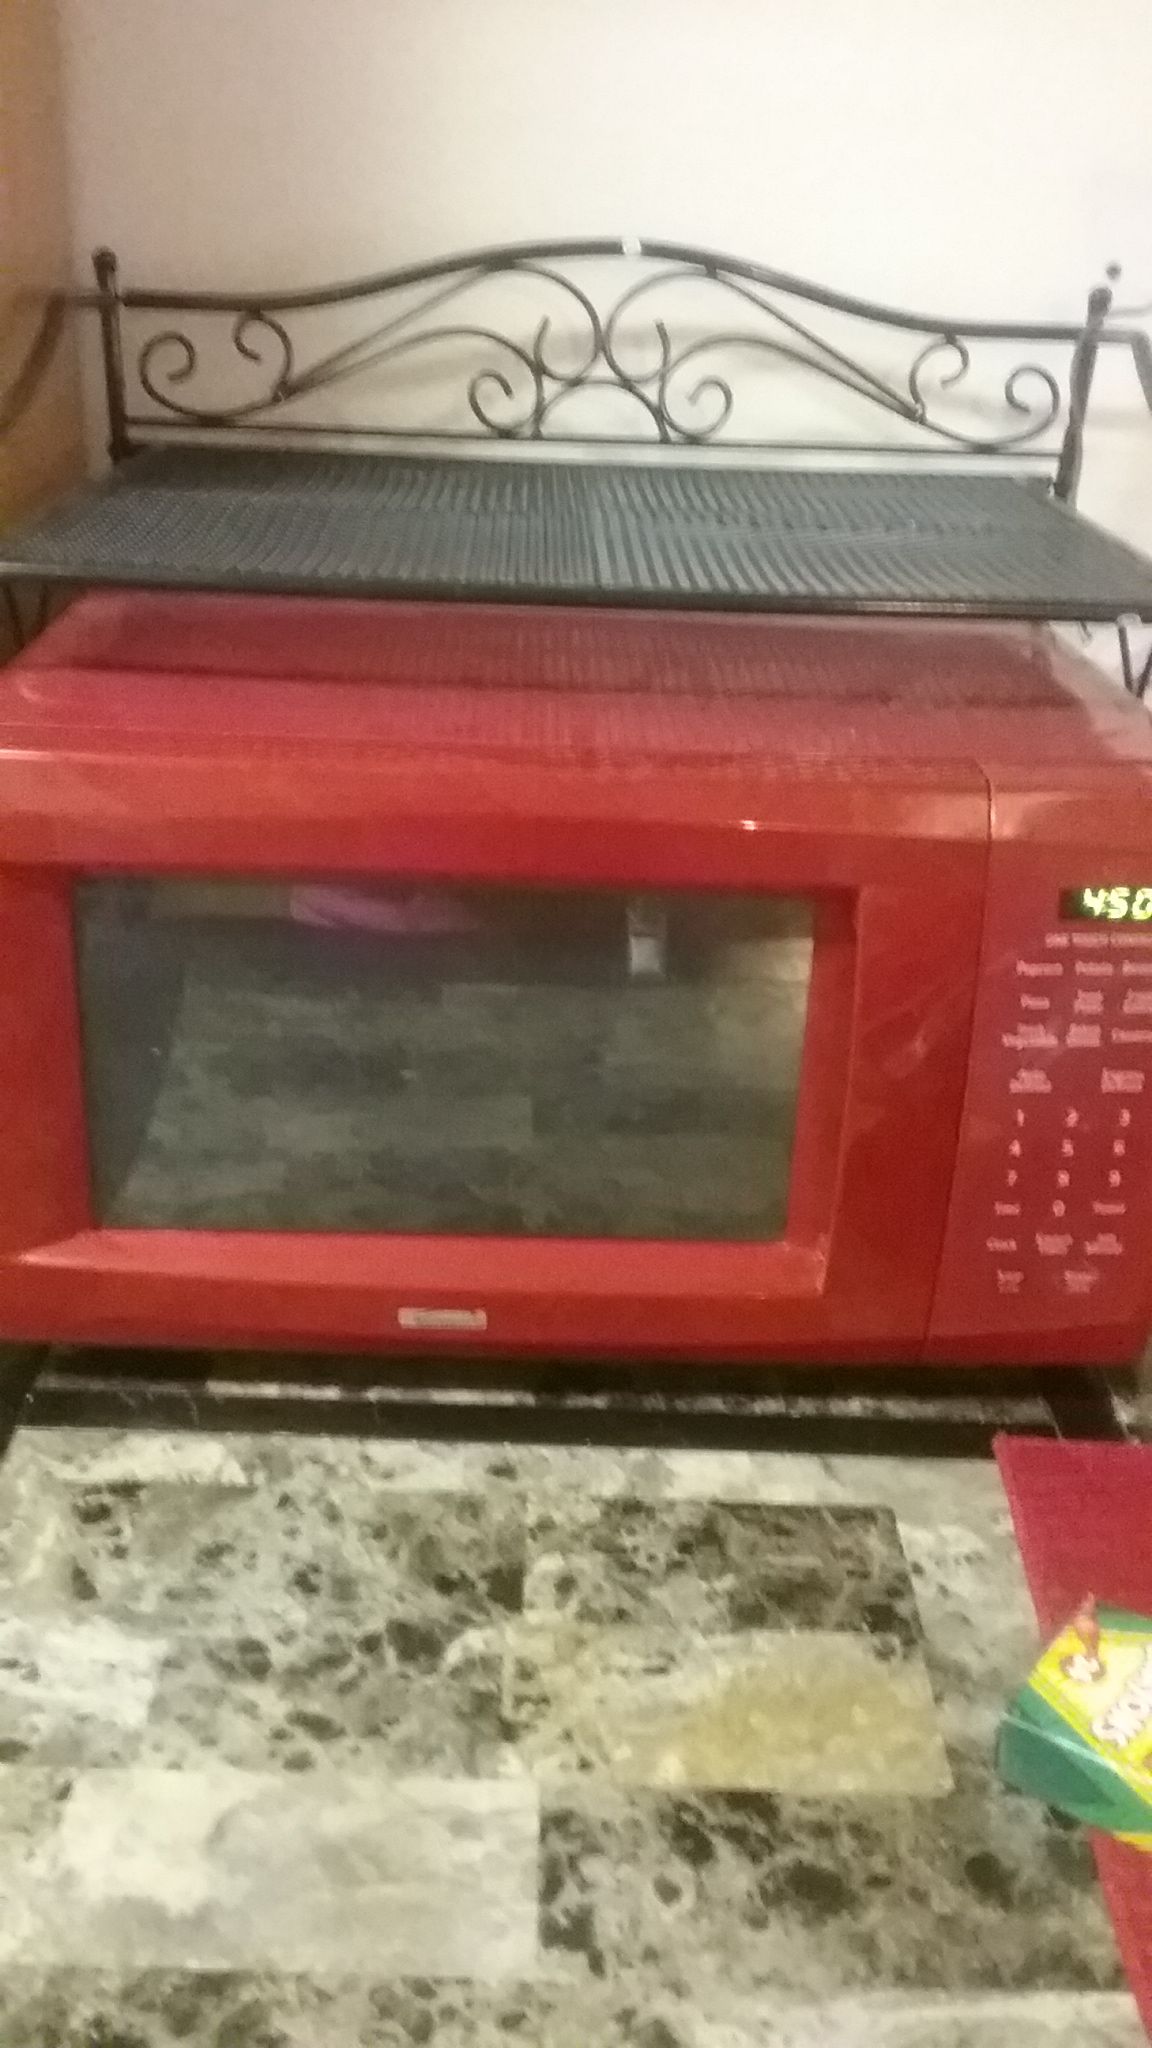 Kenmore microwave - Appliances - Cadet, Missouri, Facebook Marketplace